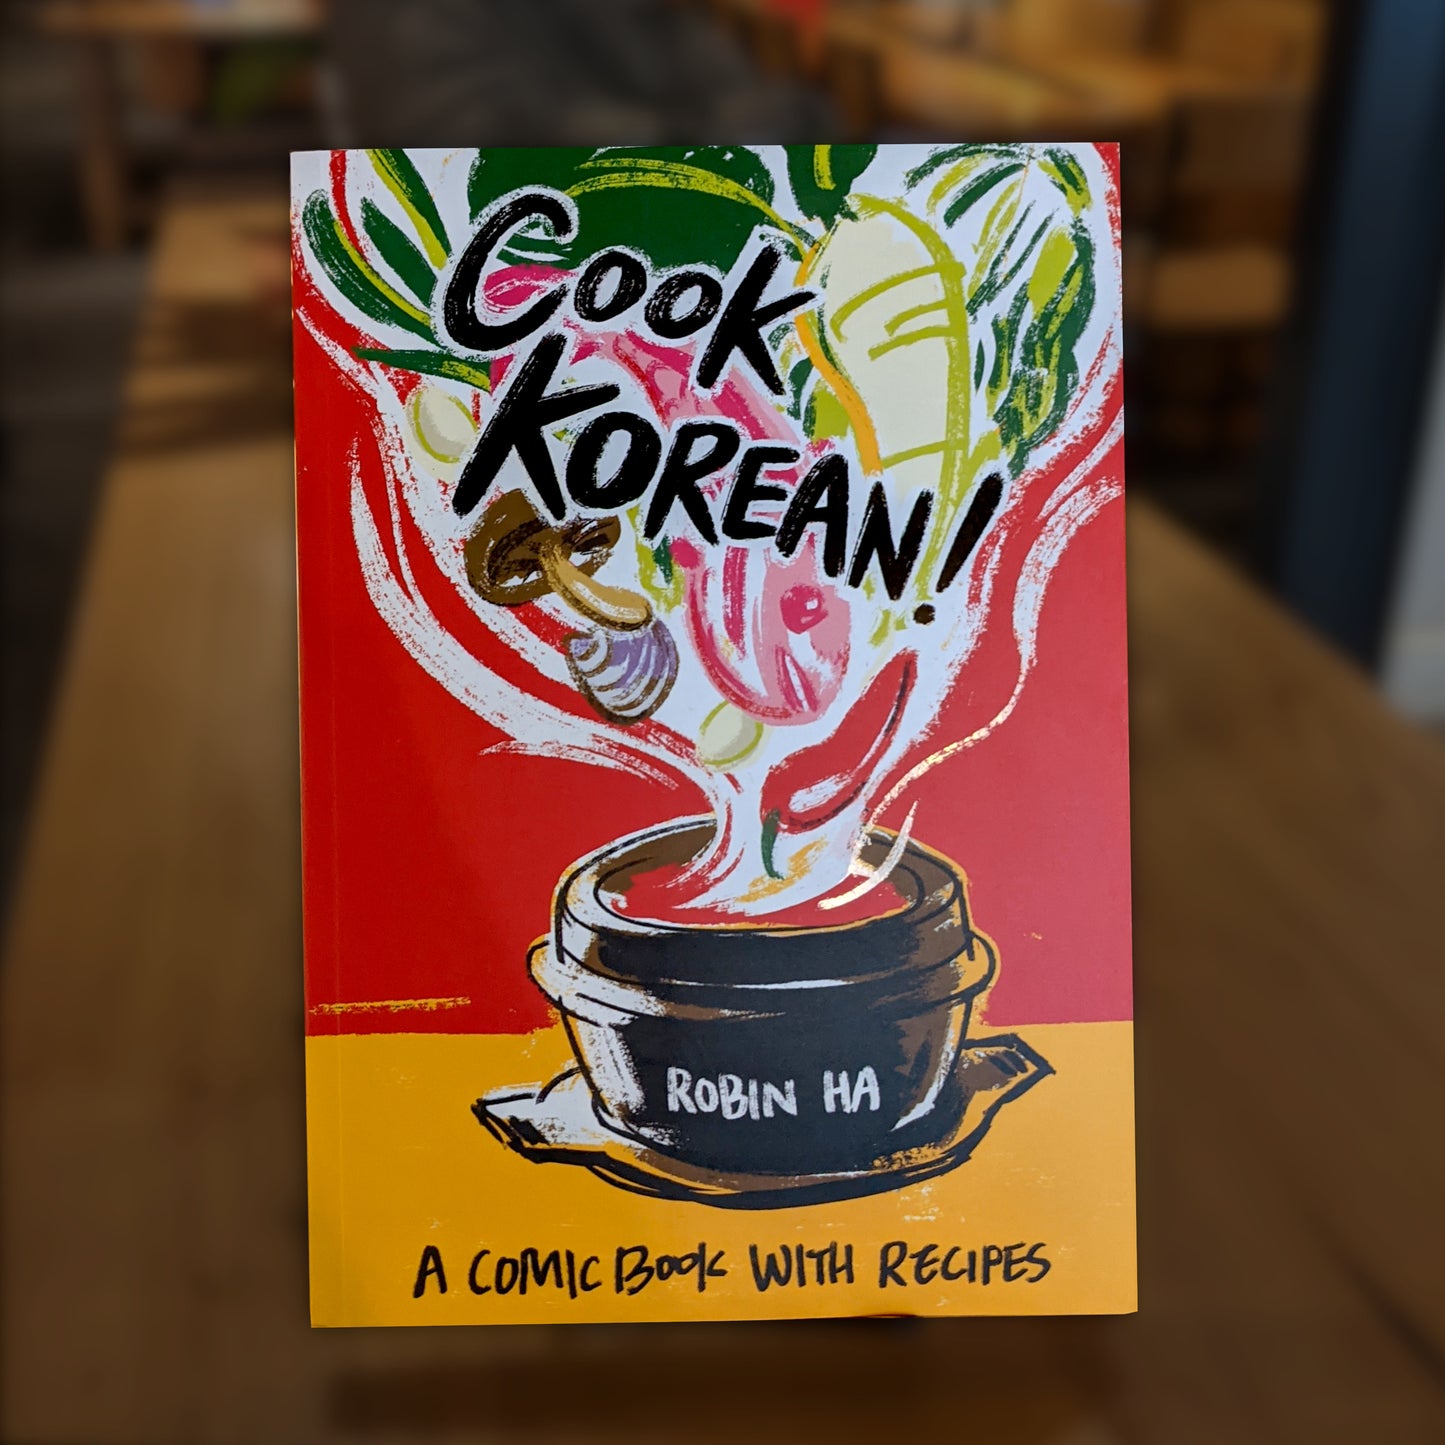 Cook Korean!: A Comic Book with Recipes